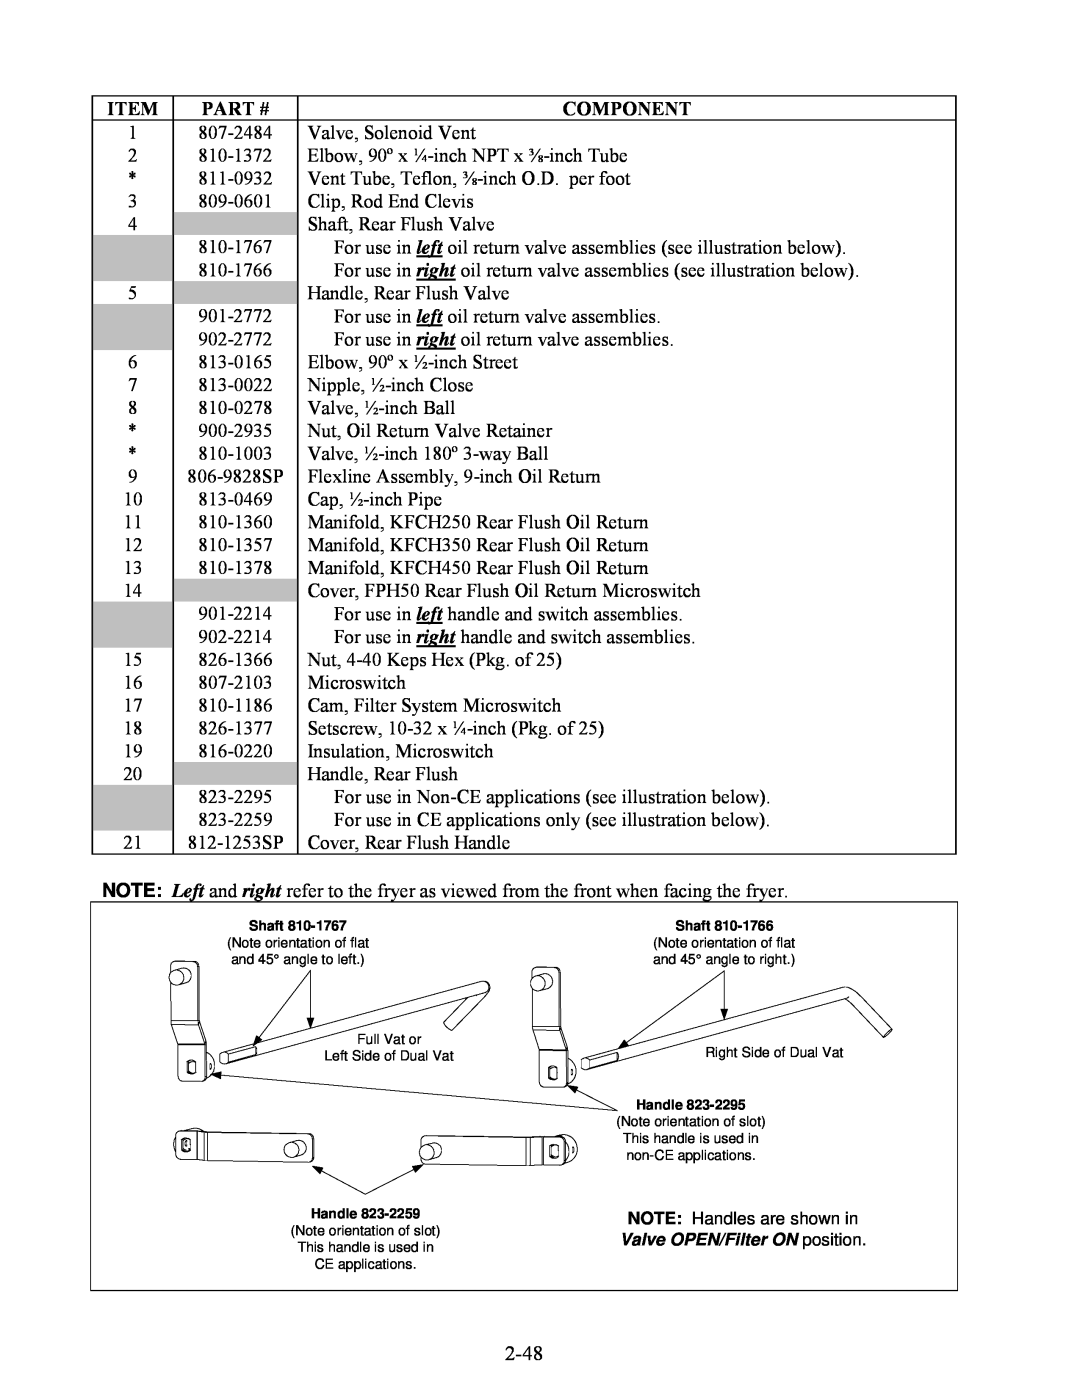 Frymaster H50 Series manual Item Part #, 1807-2484Valve, Solenoid Vent 